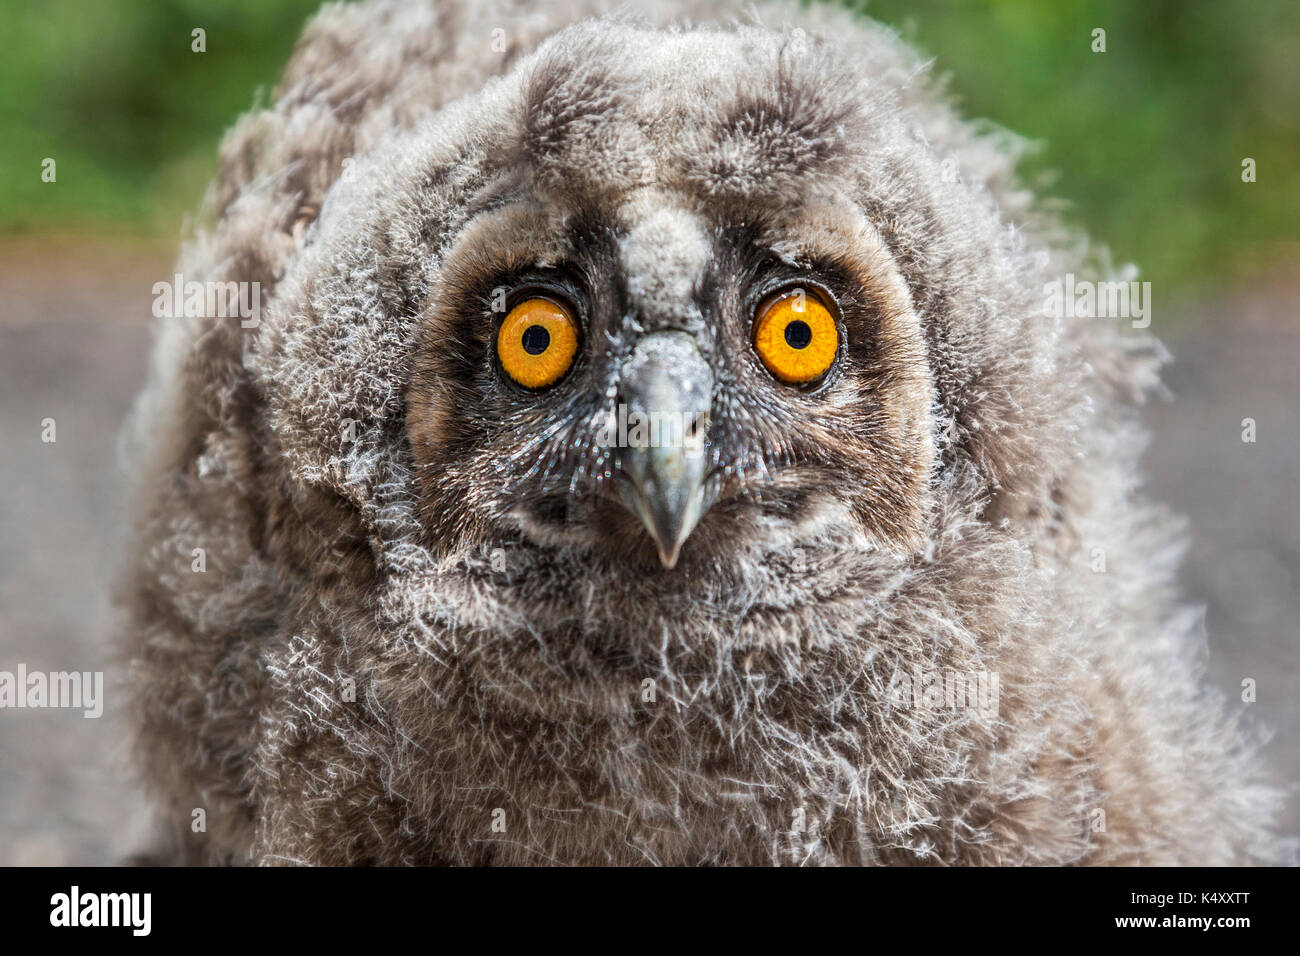 Nestling long-eared owl portrait, Asio otus Stock Photo